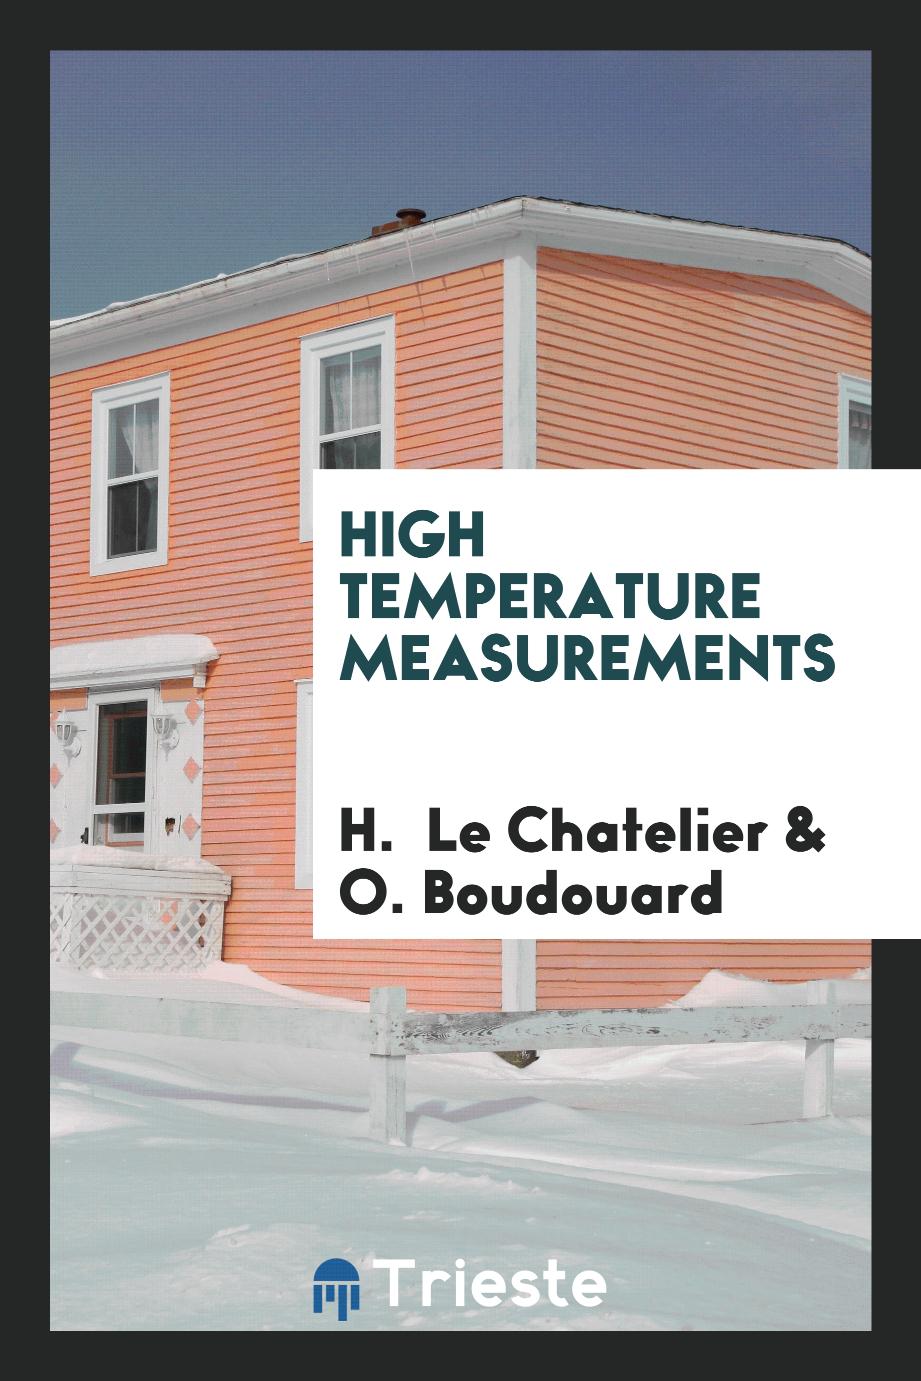 High temperature measurements